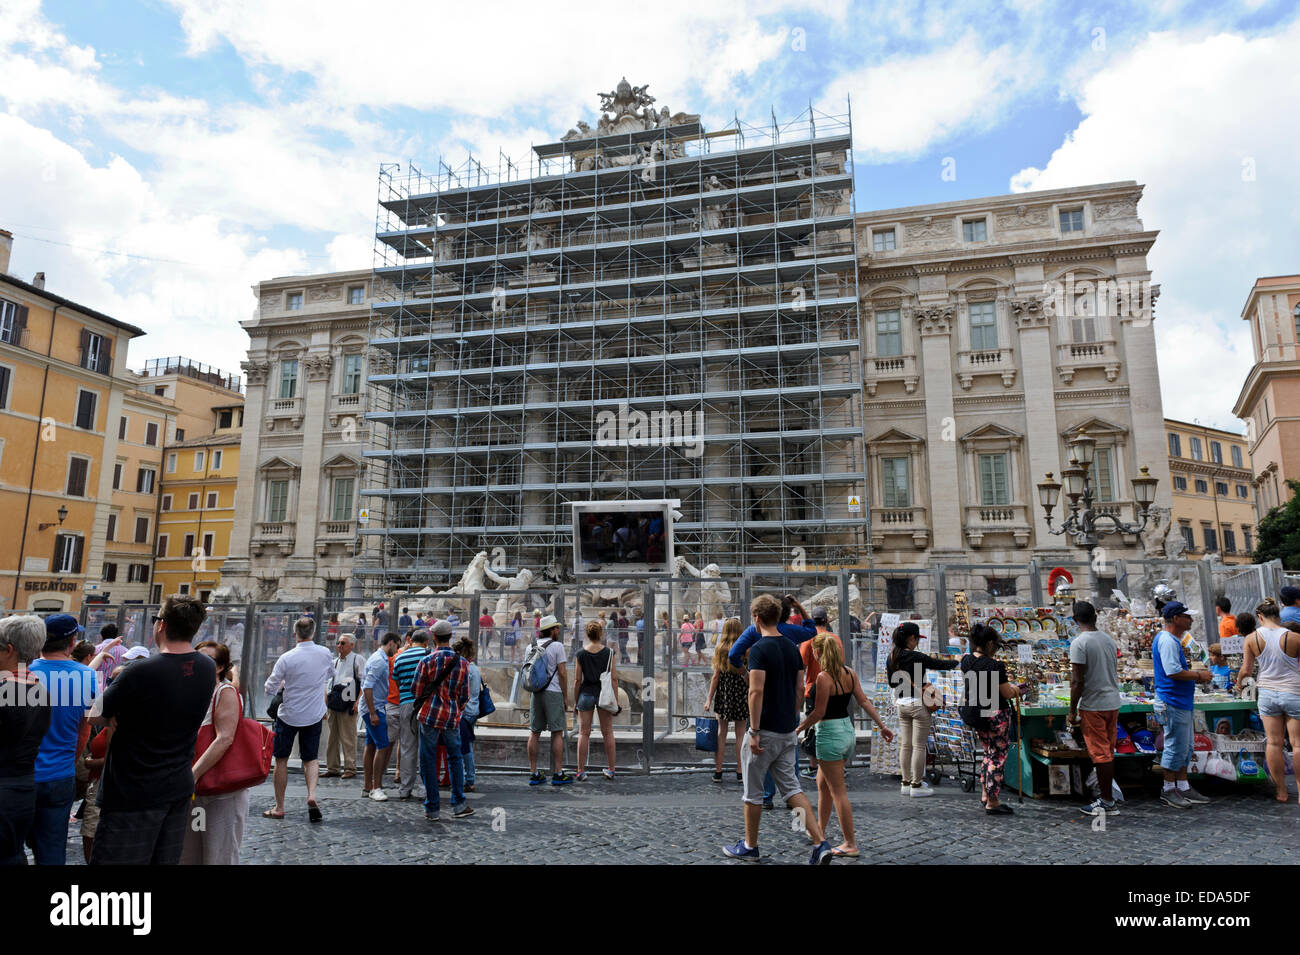 Der Trevibrunnen restauriert, Rom, Italien. Stockfoto